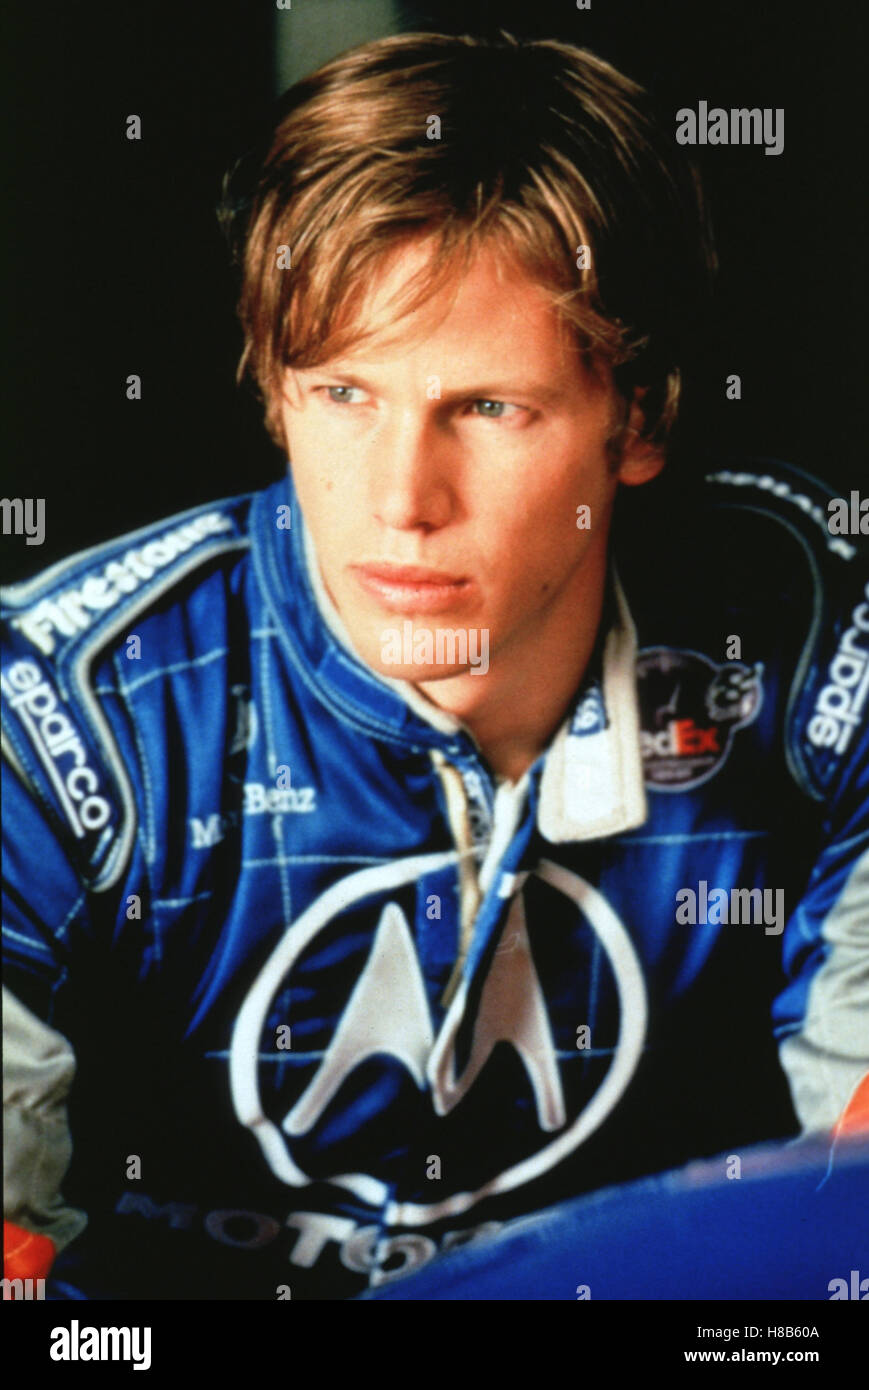 Driven, (DRIVEN) USA 2001, Regie: Renny Harlin, KIP PARDUE, Stichwort: Rennfahrer, Motorsport, Overall, Sponsoren, MOTOROLA Stock Photo